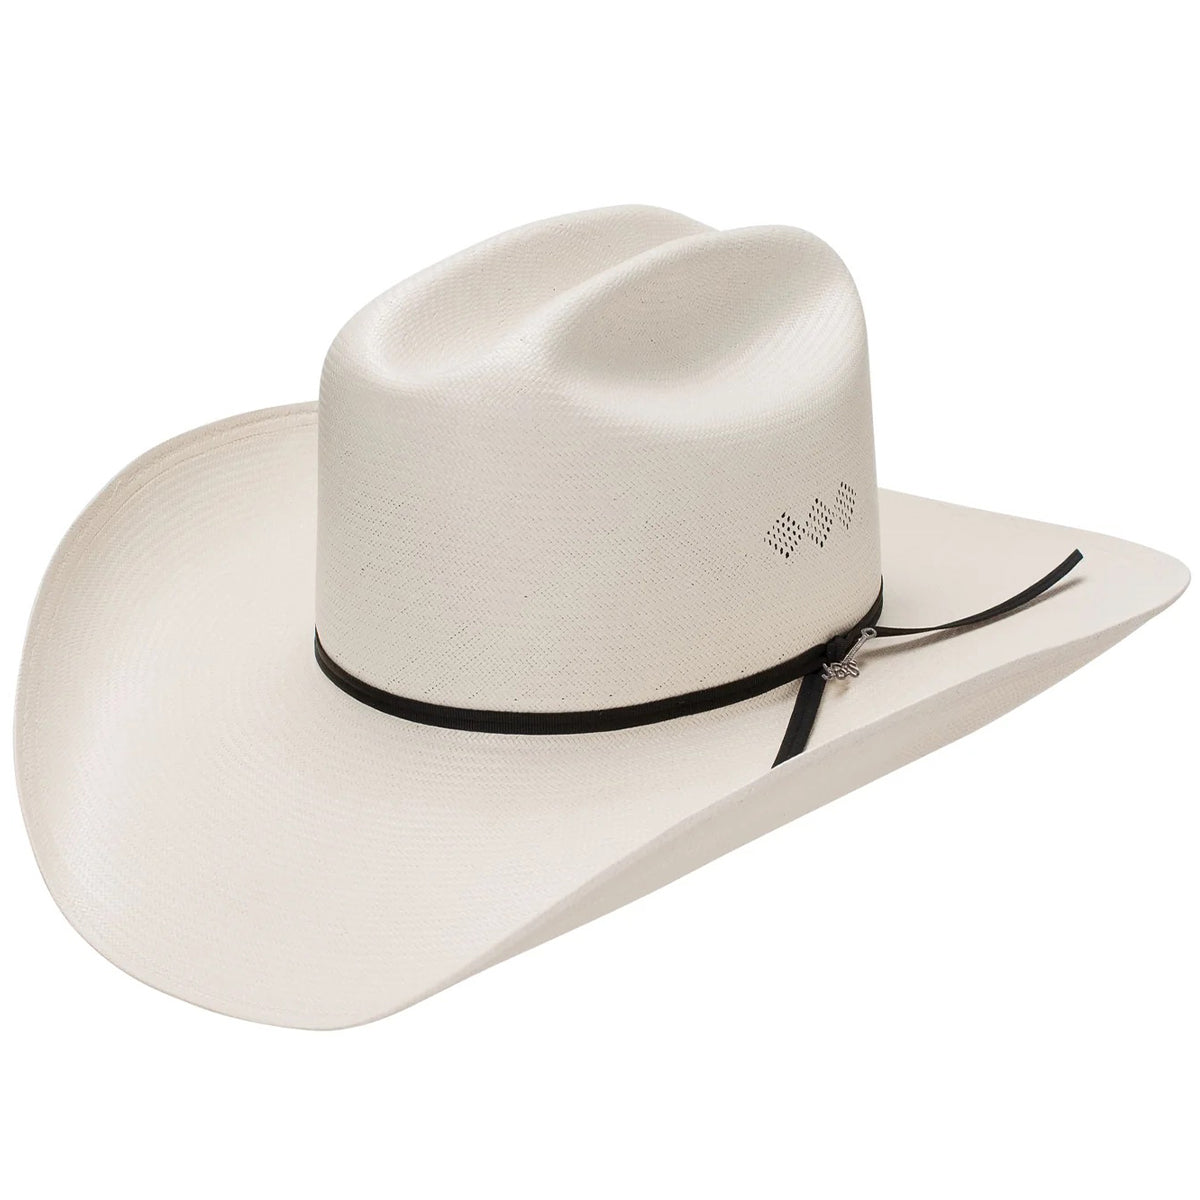 Campbell 200x Straw Cowboy Hat